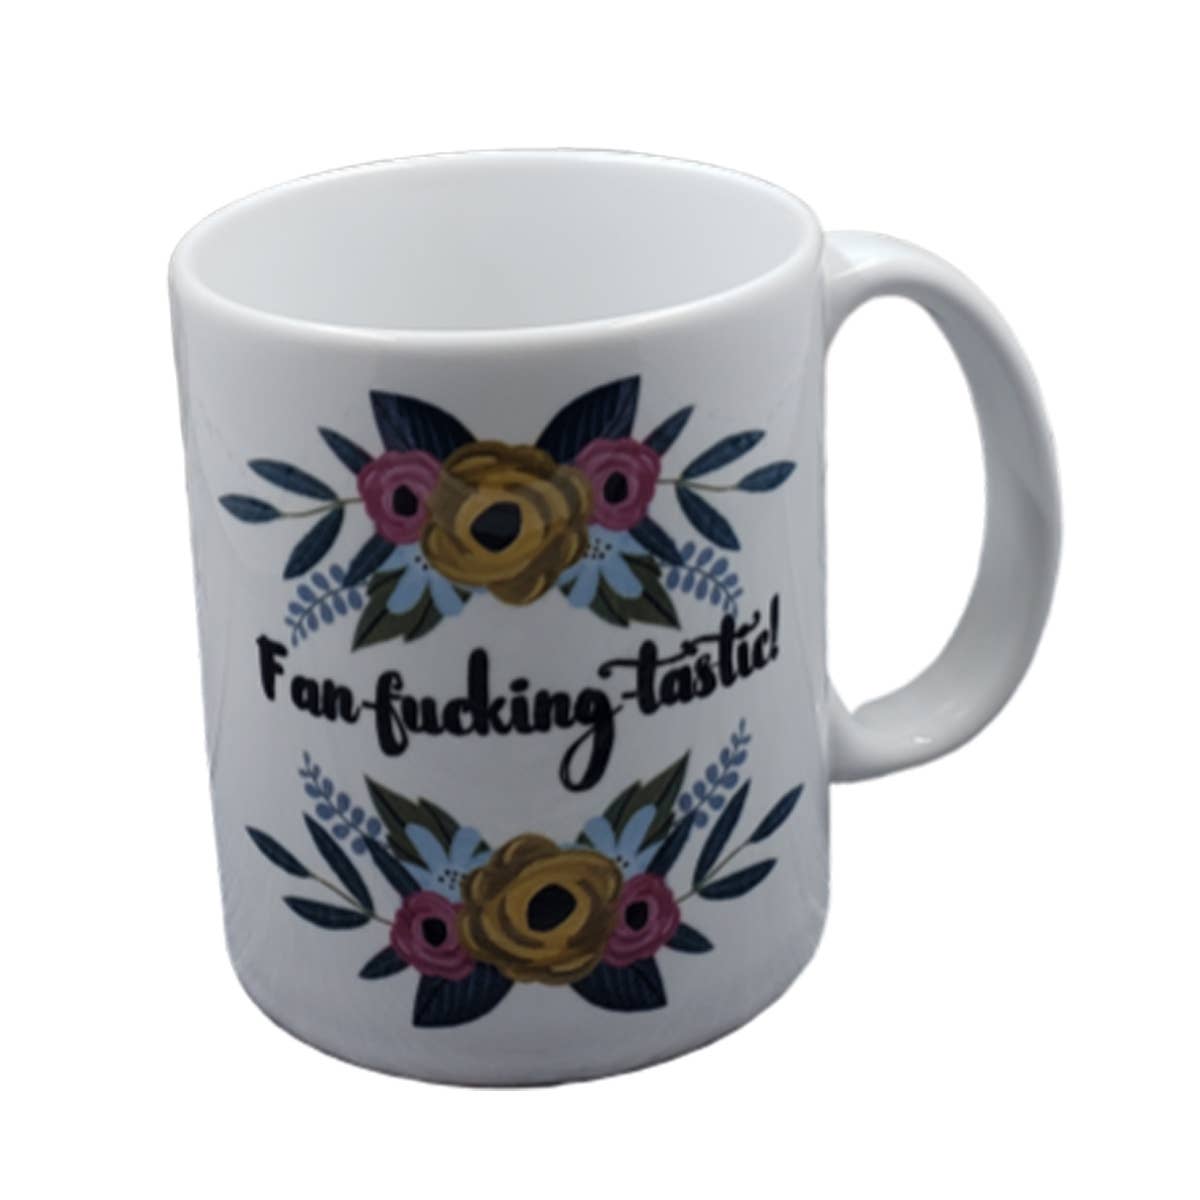 Fan-fucking-tastic Coffee Mug